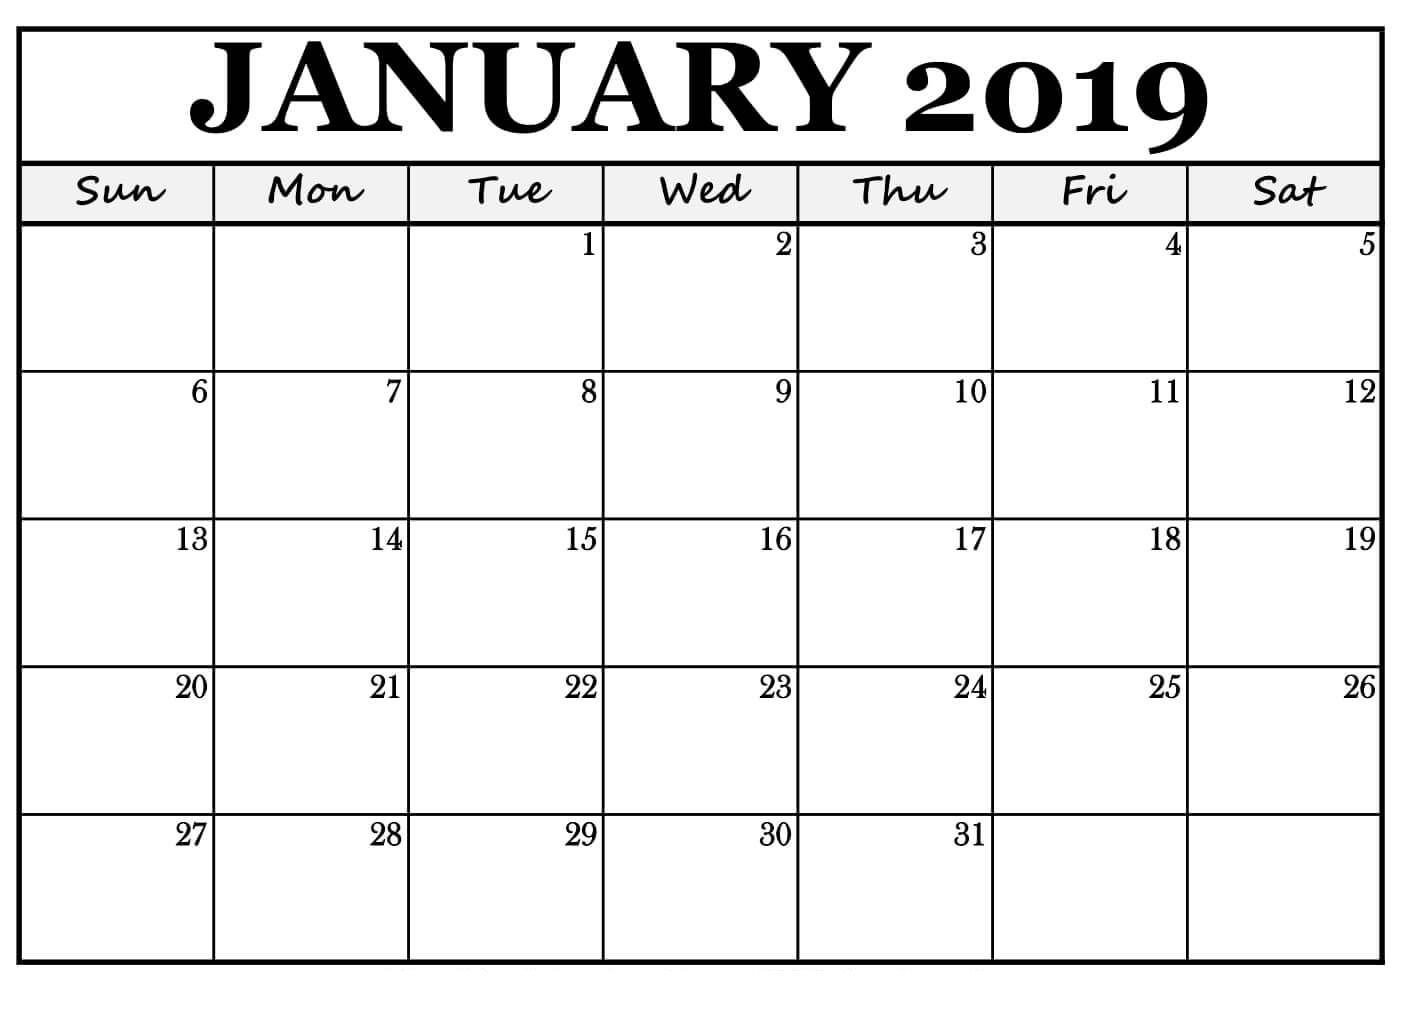 Blank Monthly Calendar Template Pdf January 2019 Calendar for Landscape Free Print